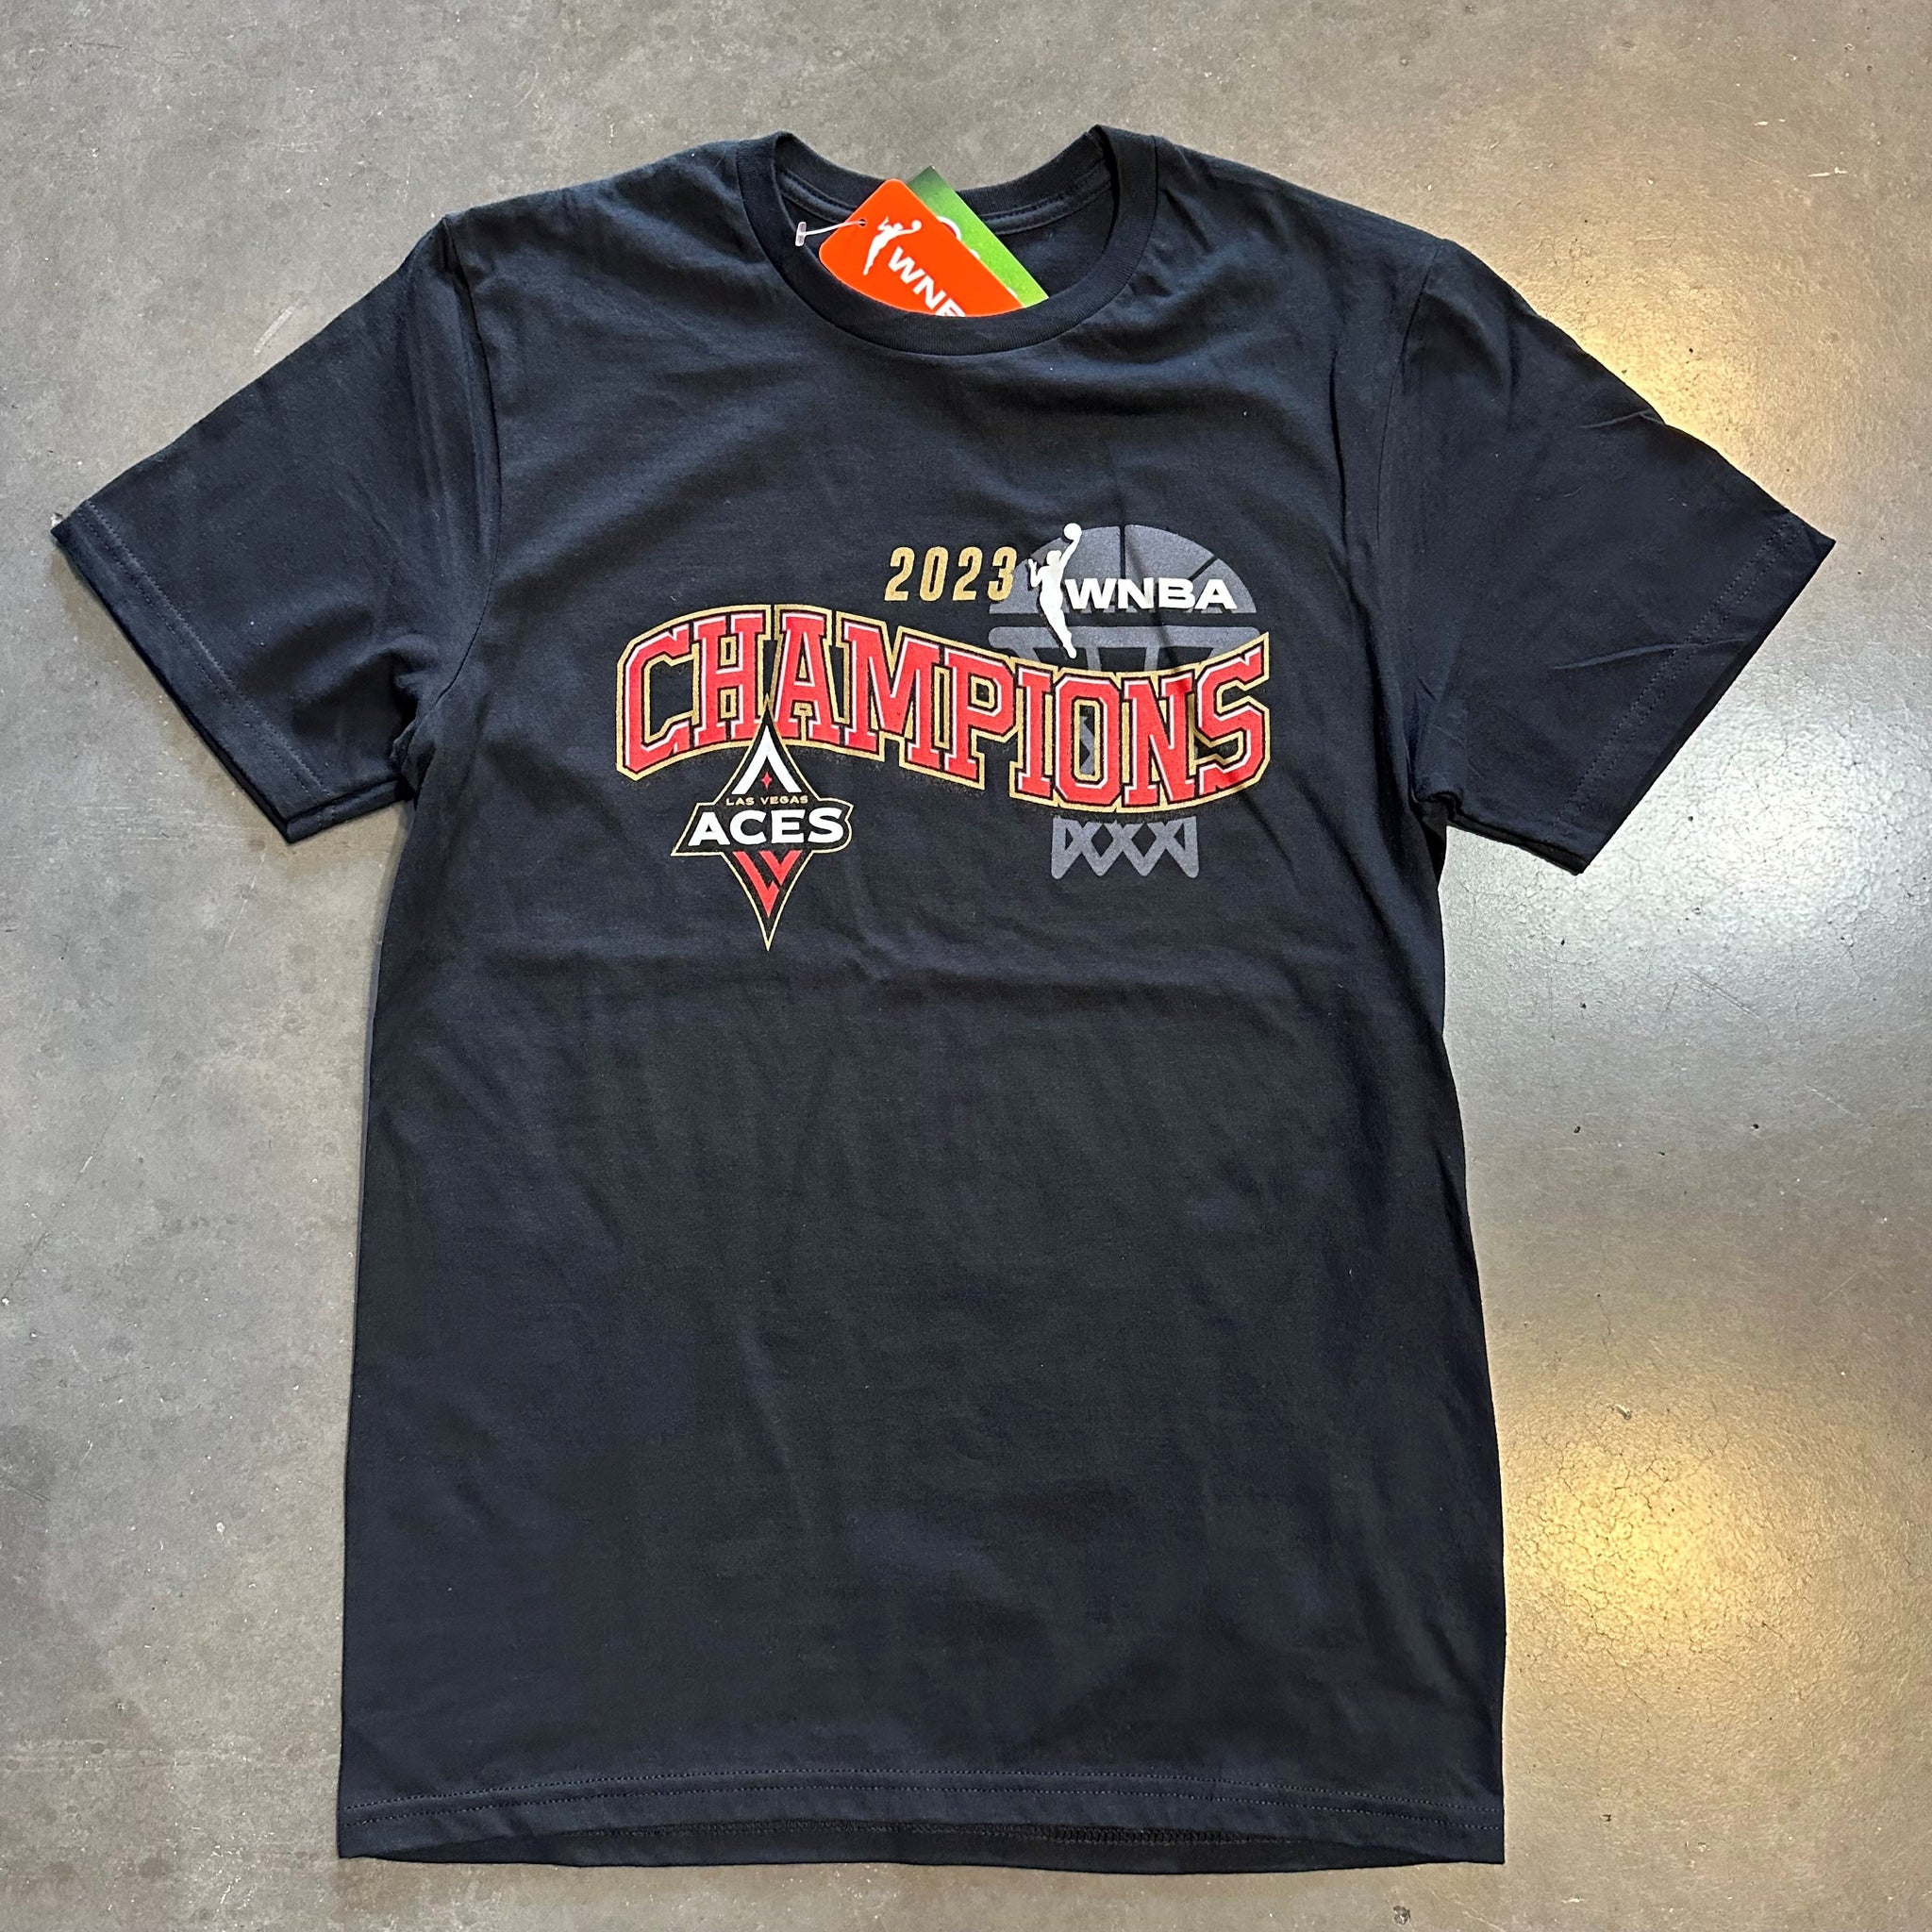 Raiders Bedazzle Script T-Shirt – Sports Town USA